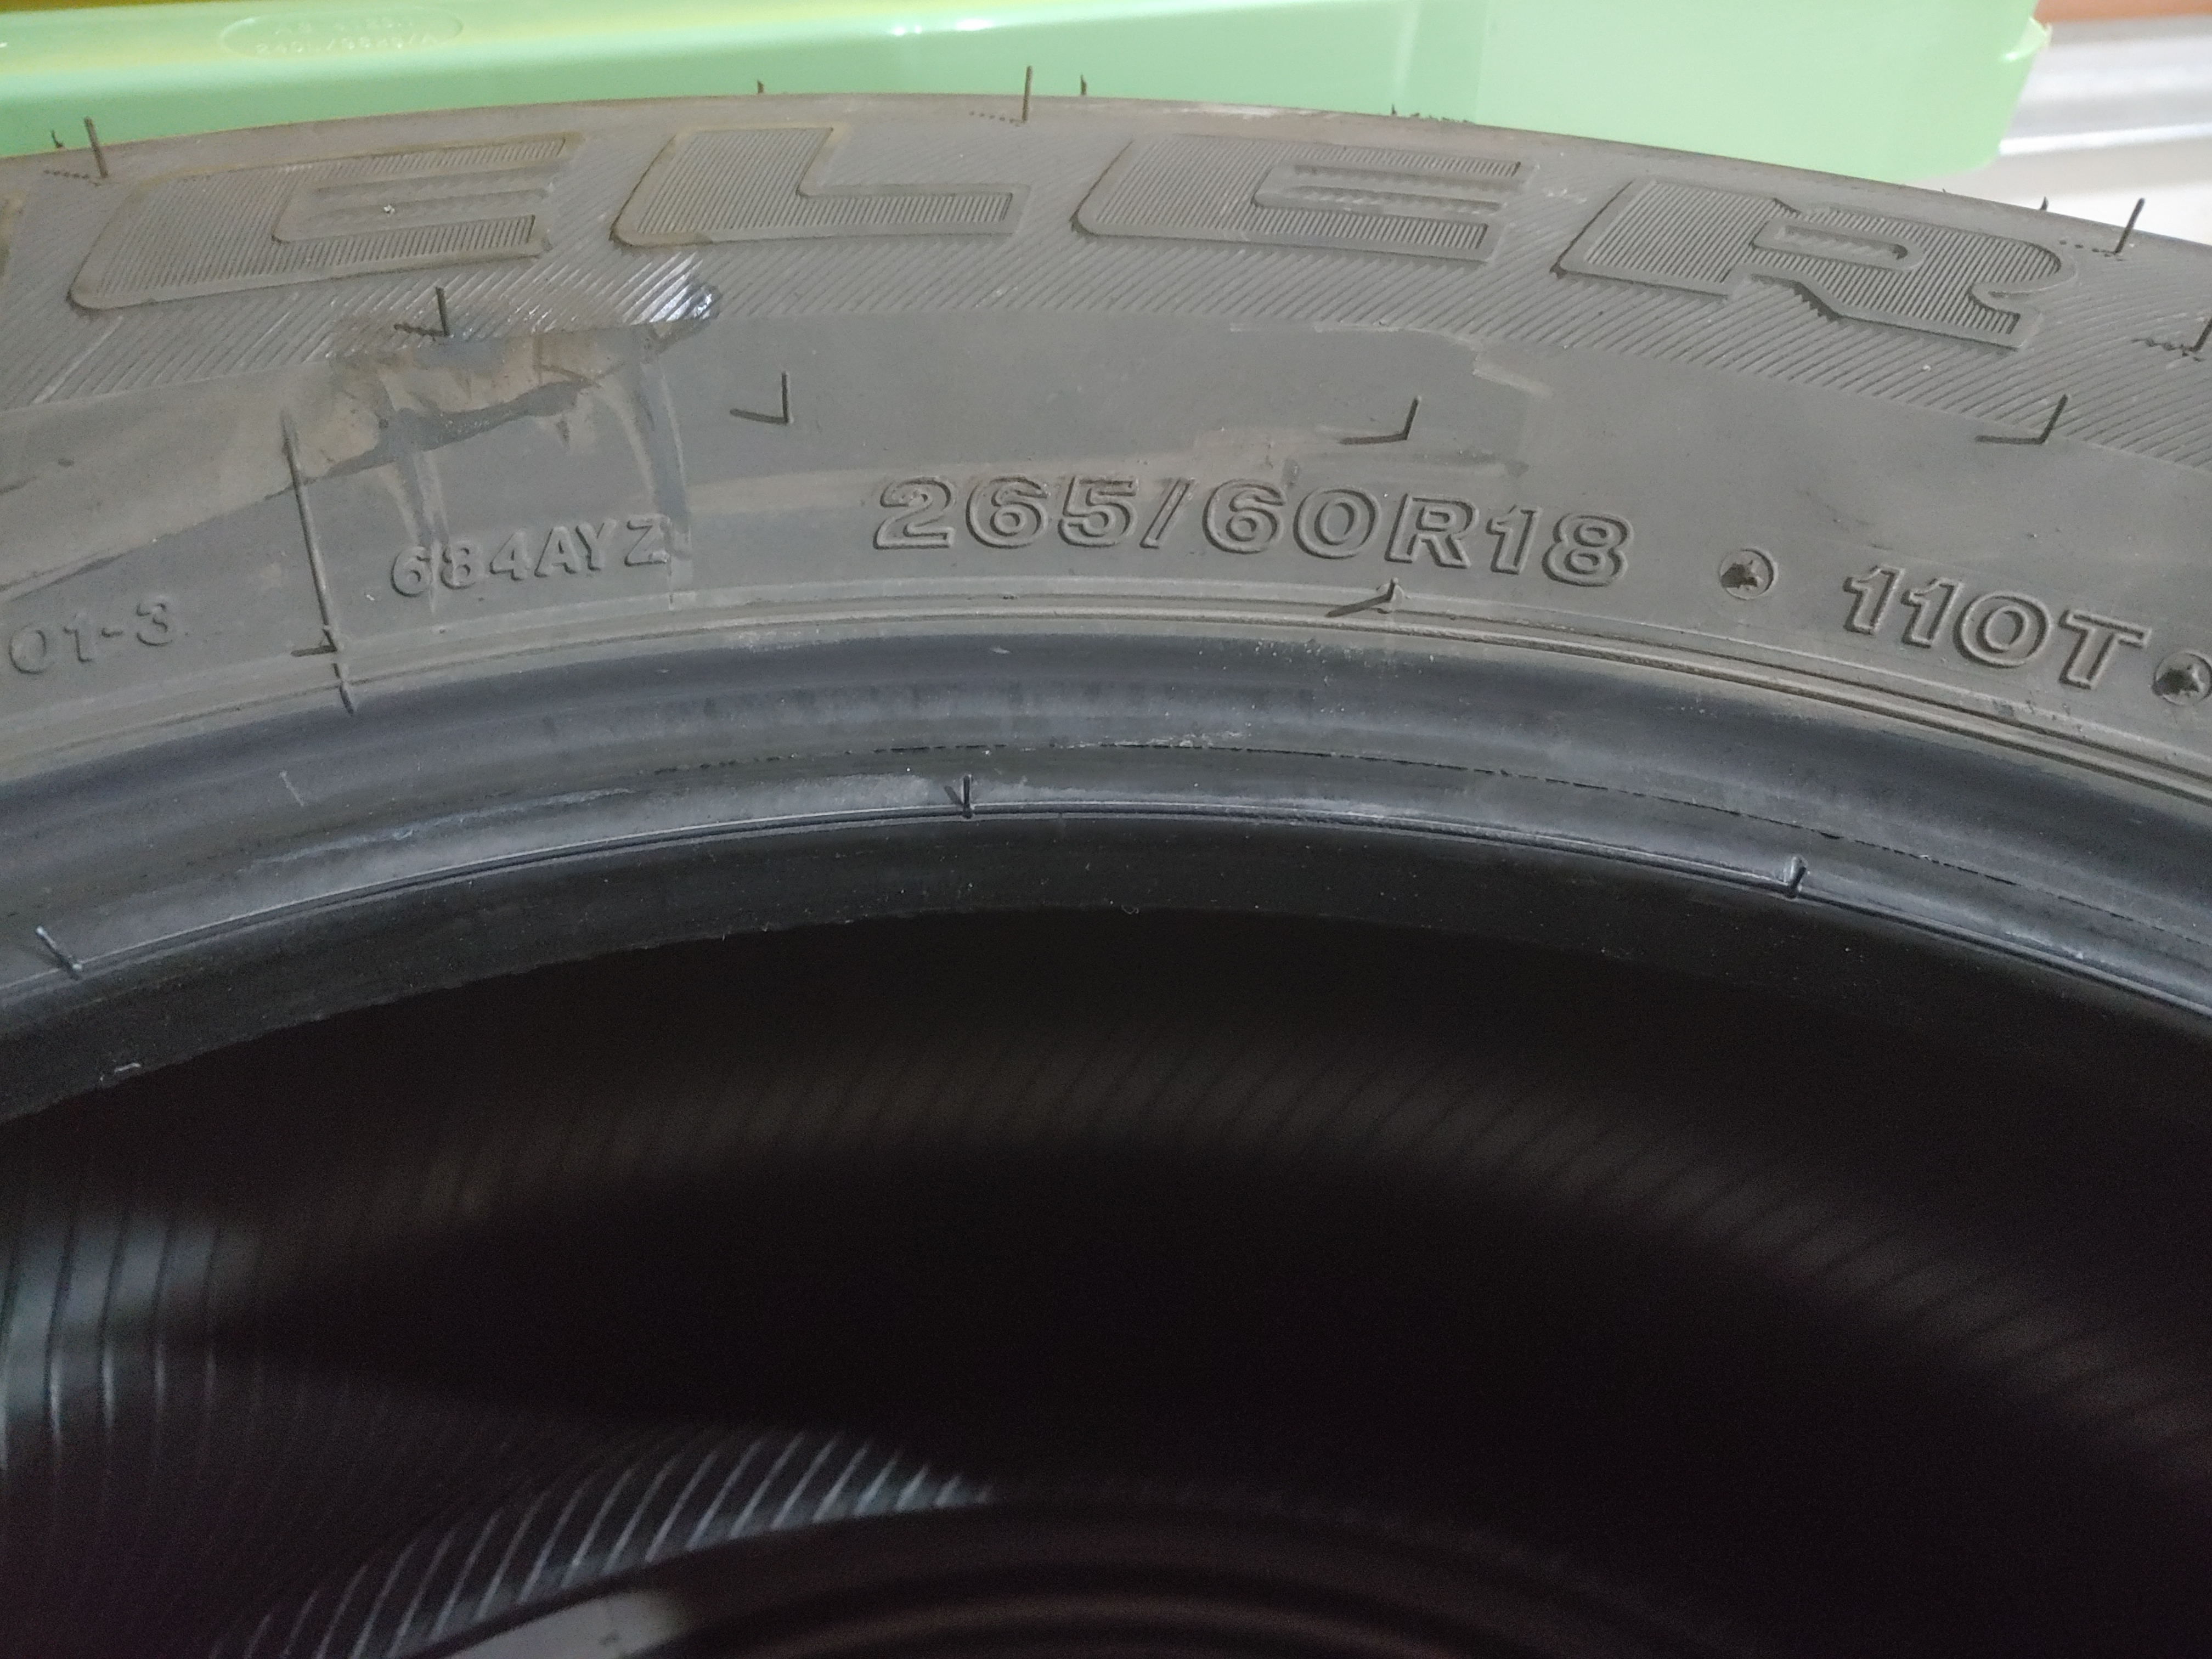 Bridgestone Dueller H/T 265/60/R18 set of 4 tyres